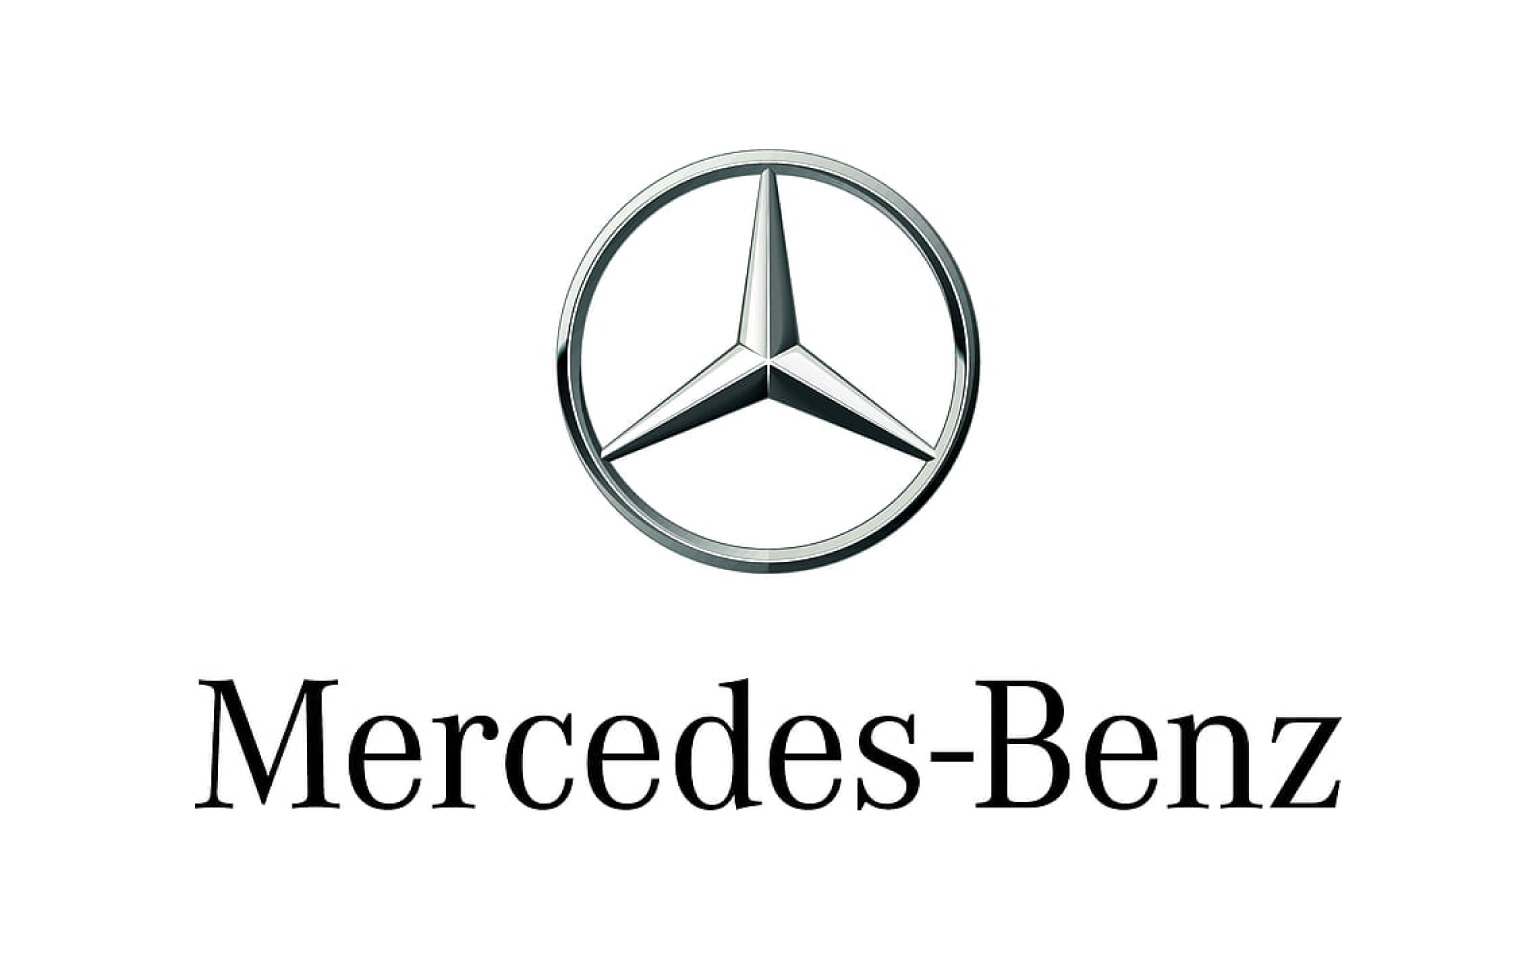 MercedesBenz_logo